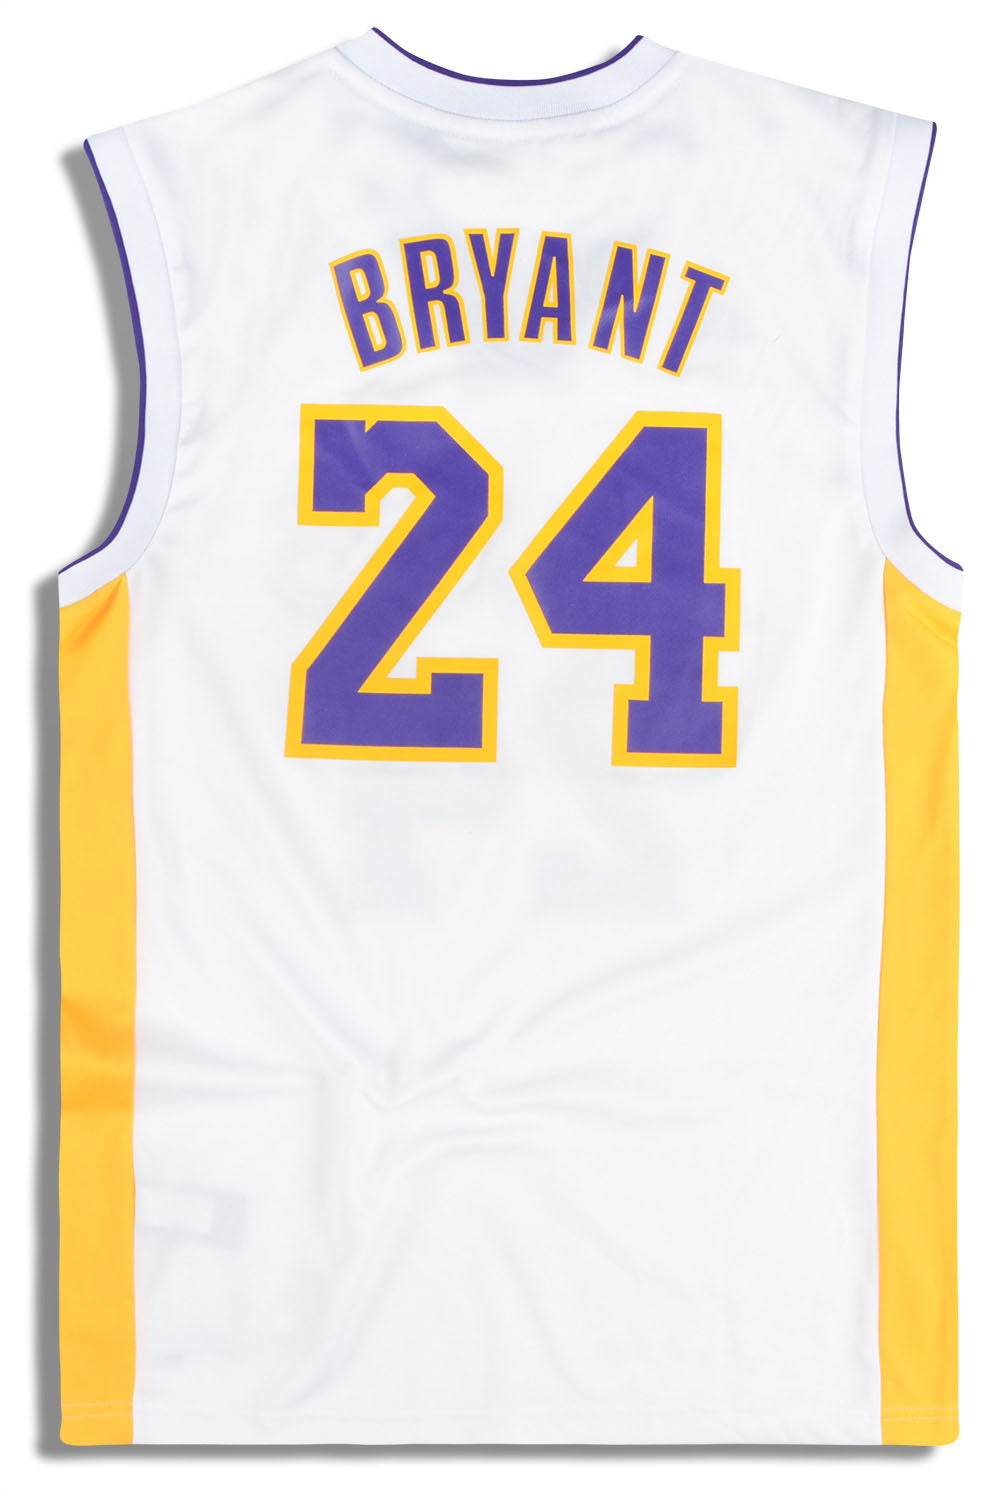 LOS ANGELES LAKERS BASKETBALL VINTAGE NBA JERSEY Kobe Bryant #24 ADIDAS  Size S